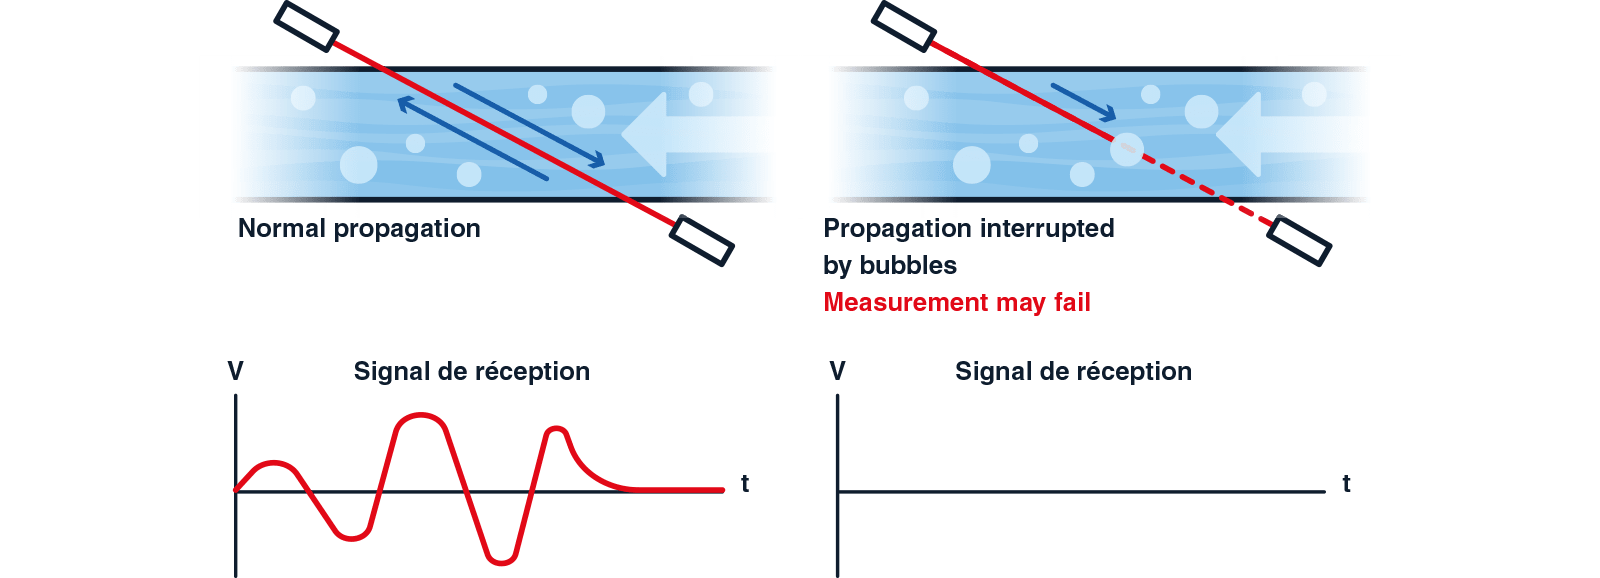 propagation-normal-and-interrupted-schema-es